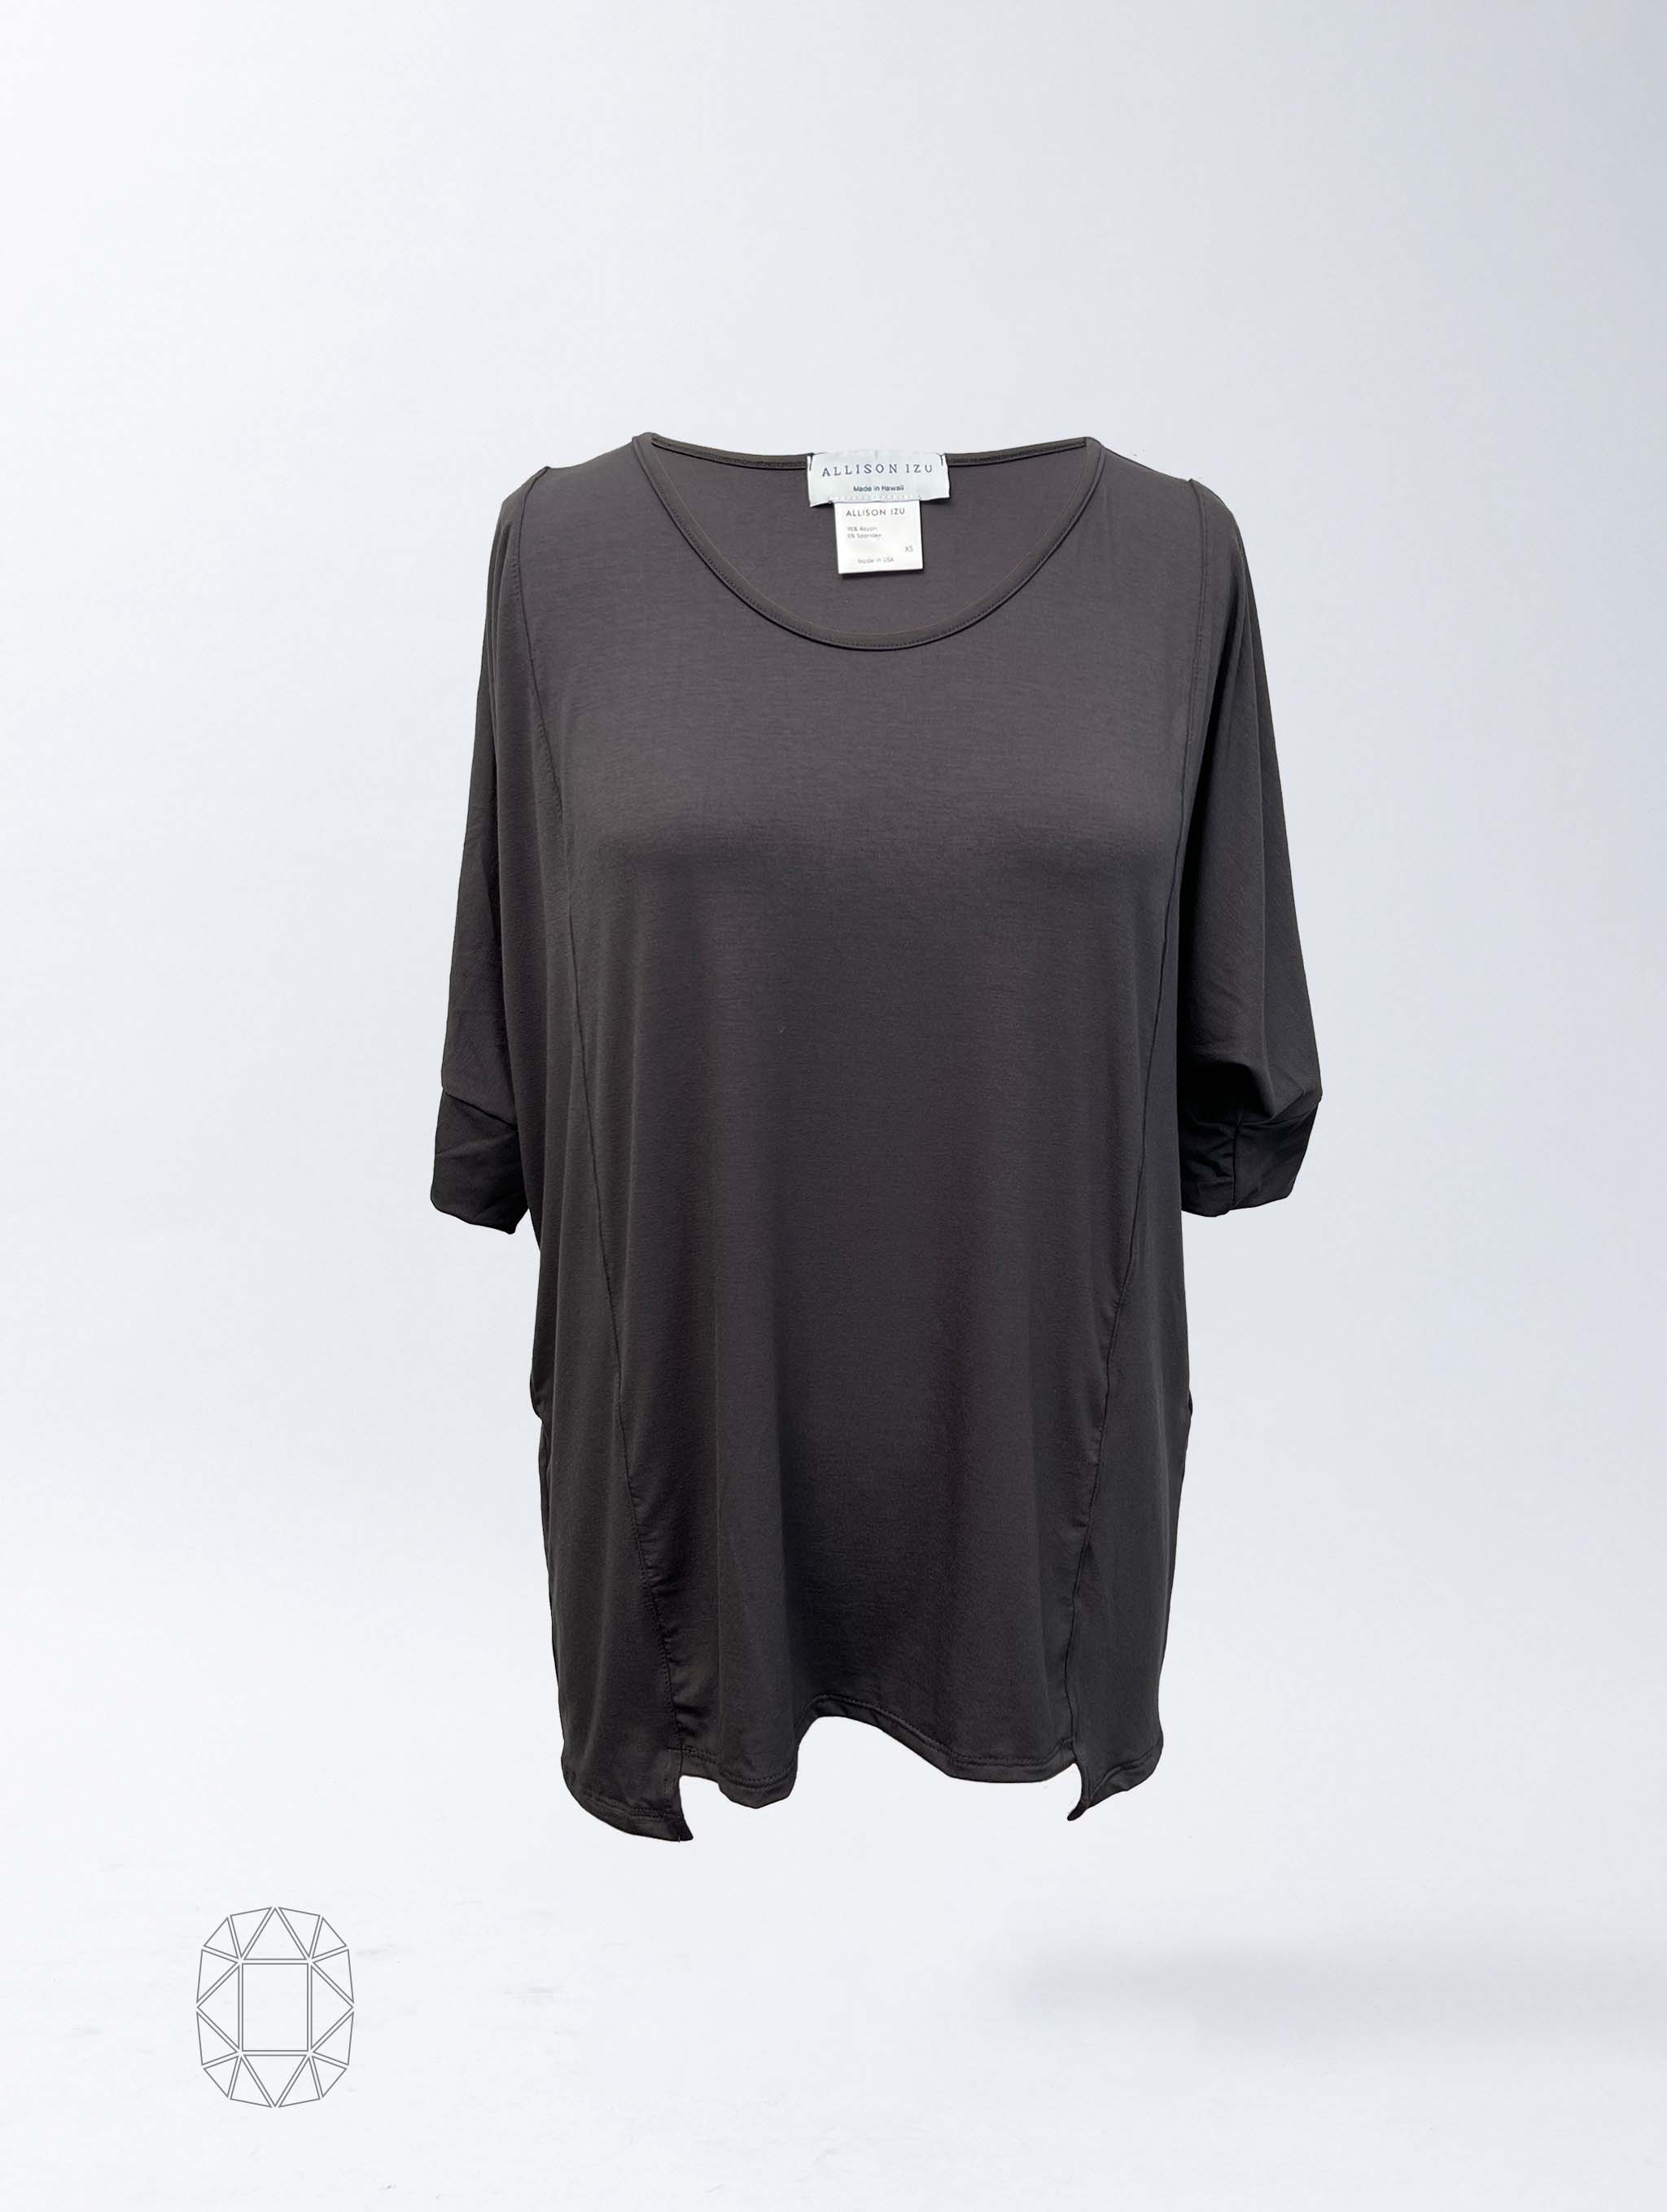 Misa Top - Washed Black Rayon Jersey